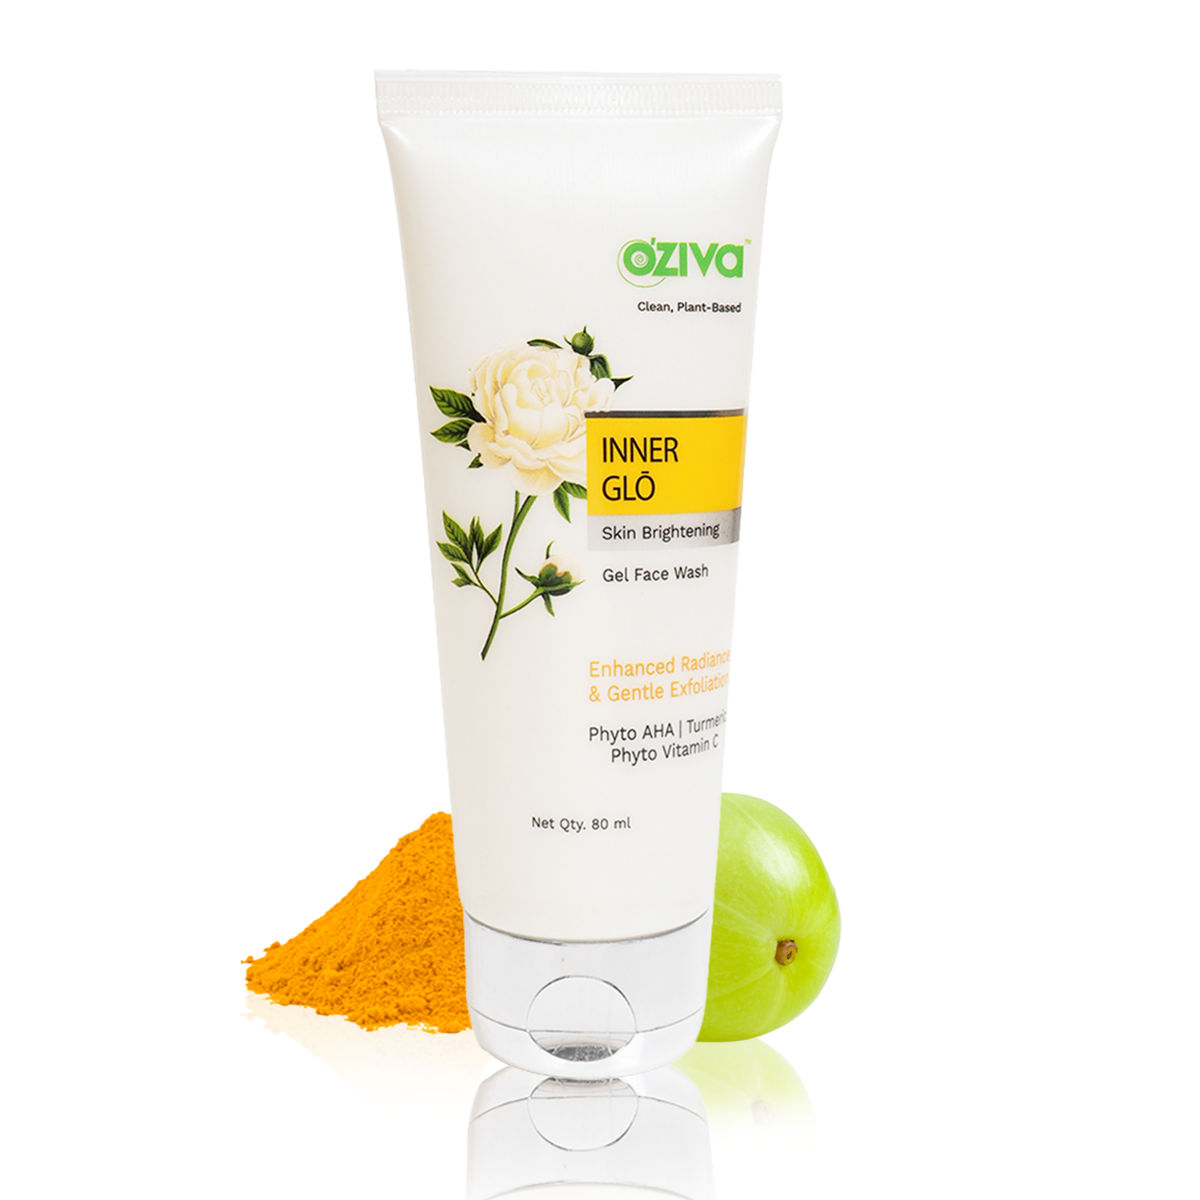 OZiva Inner Glo Skin Brightening Gel Face Wash, 80 ml, Pack of 1 